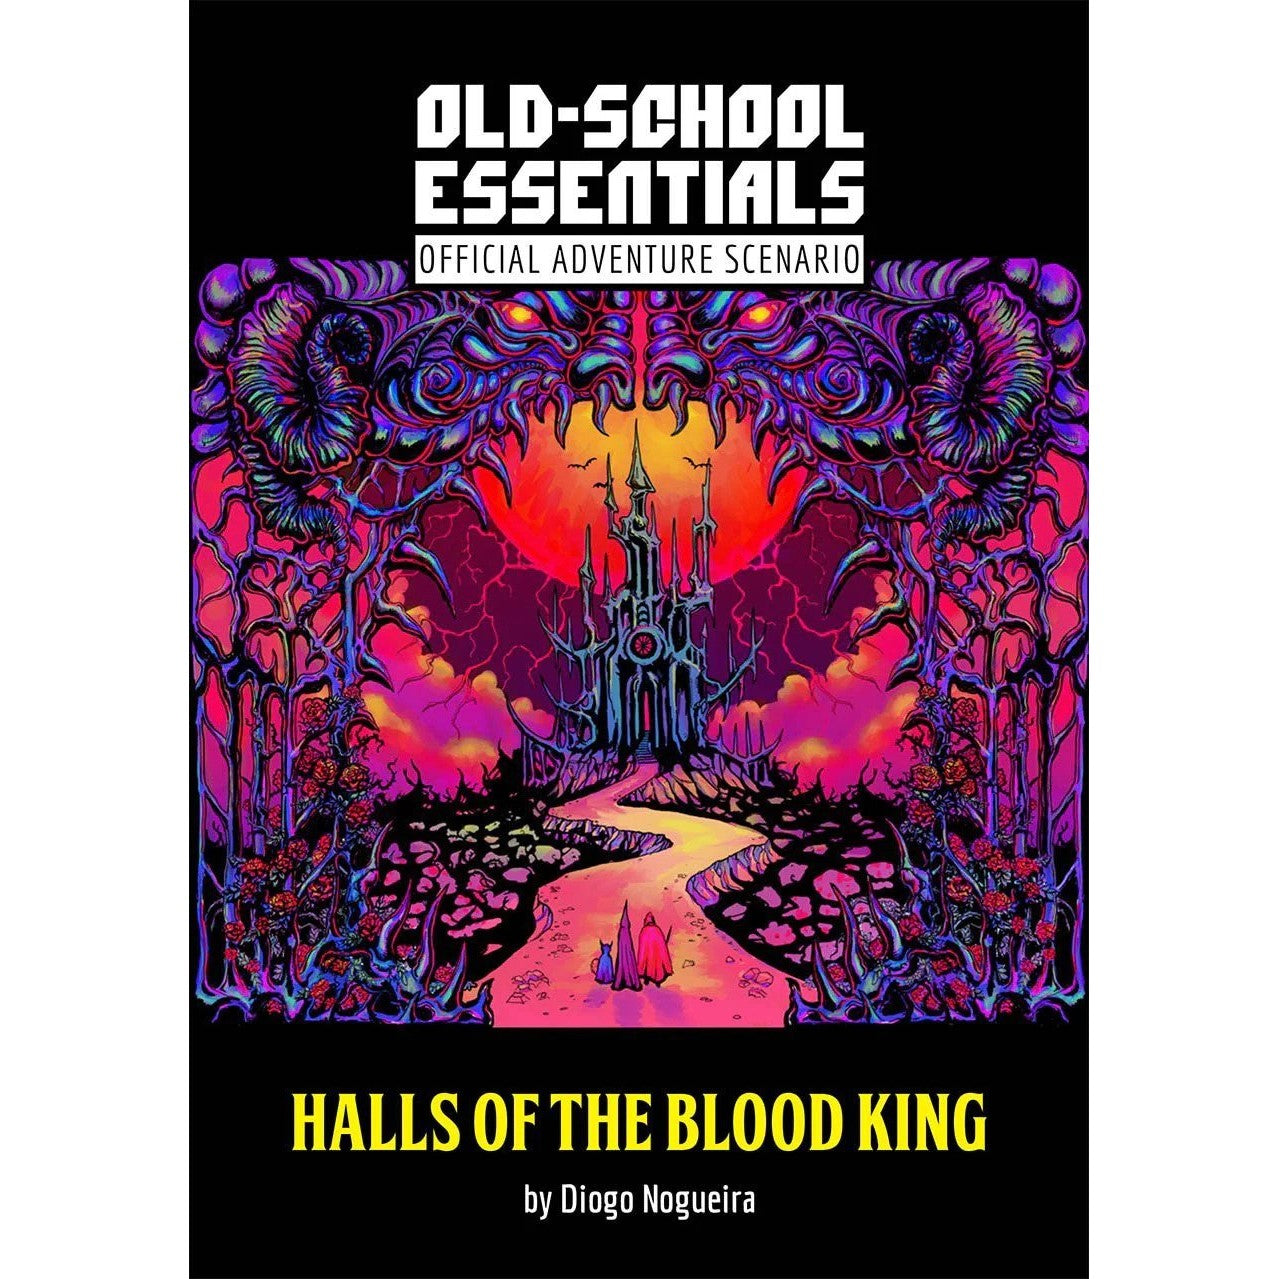 Old-School Essentials Official Adventure Scenario - Halls of the Blood King